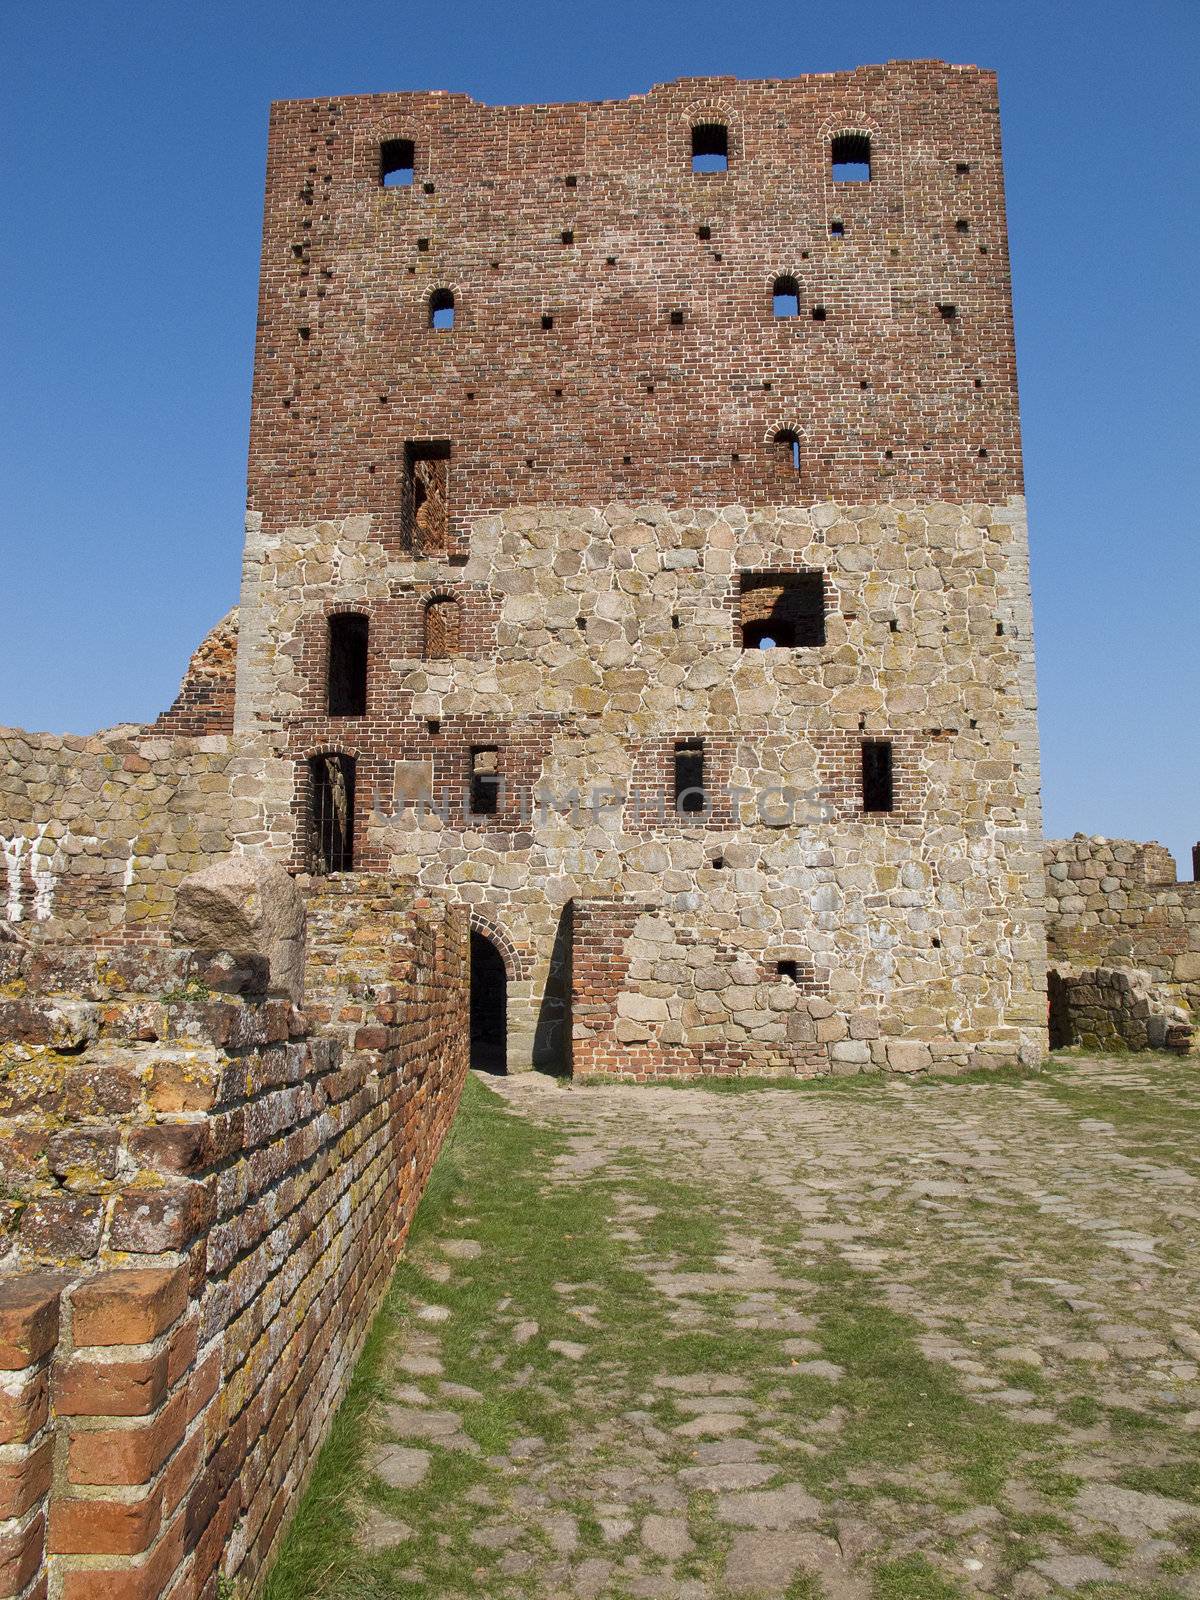 hammershus, northern europe's largest fortress on bornholm, denmark